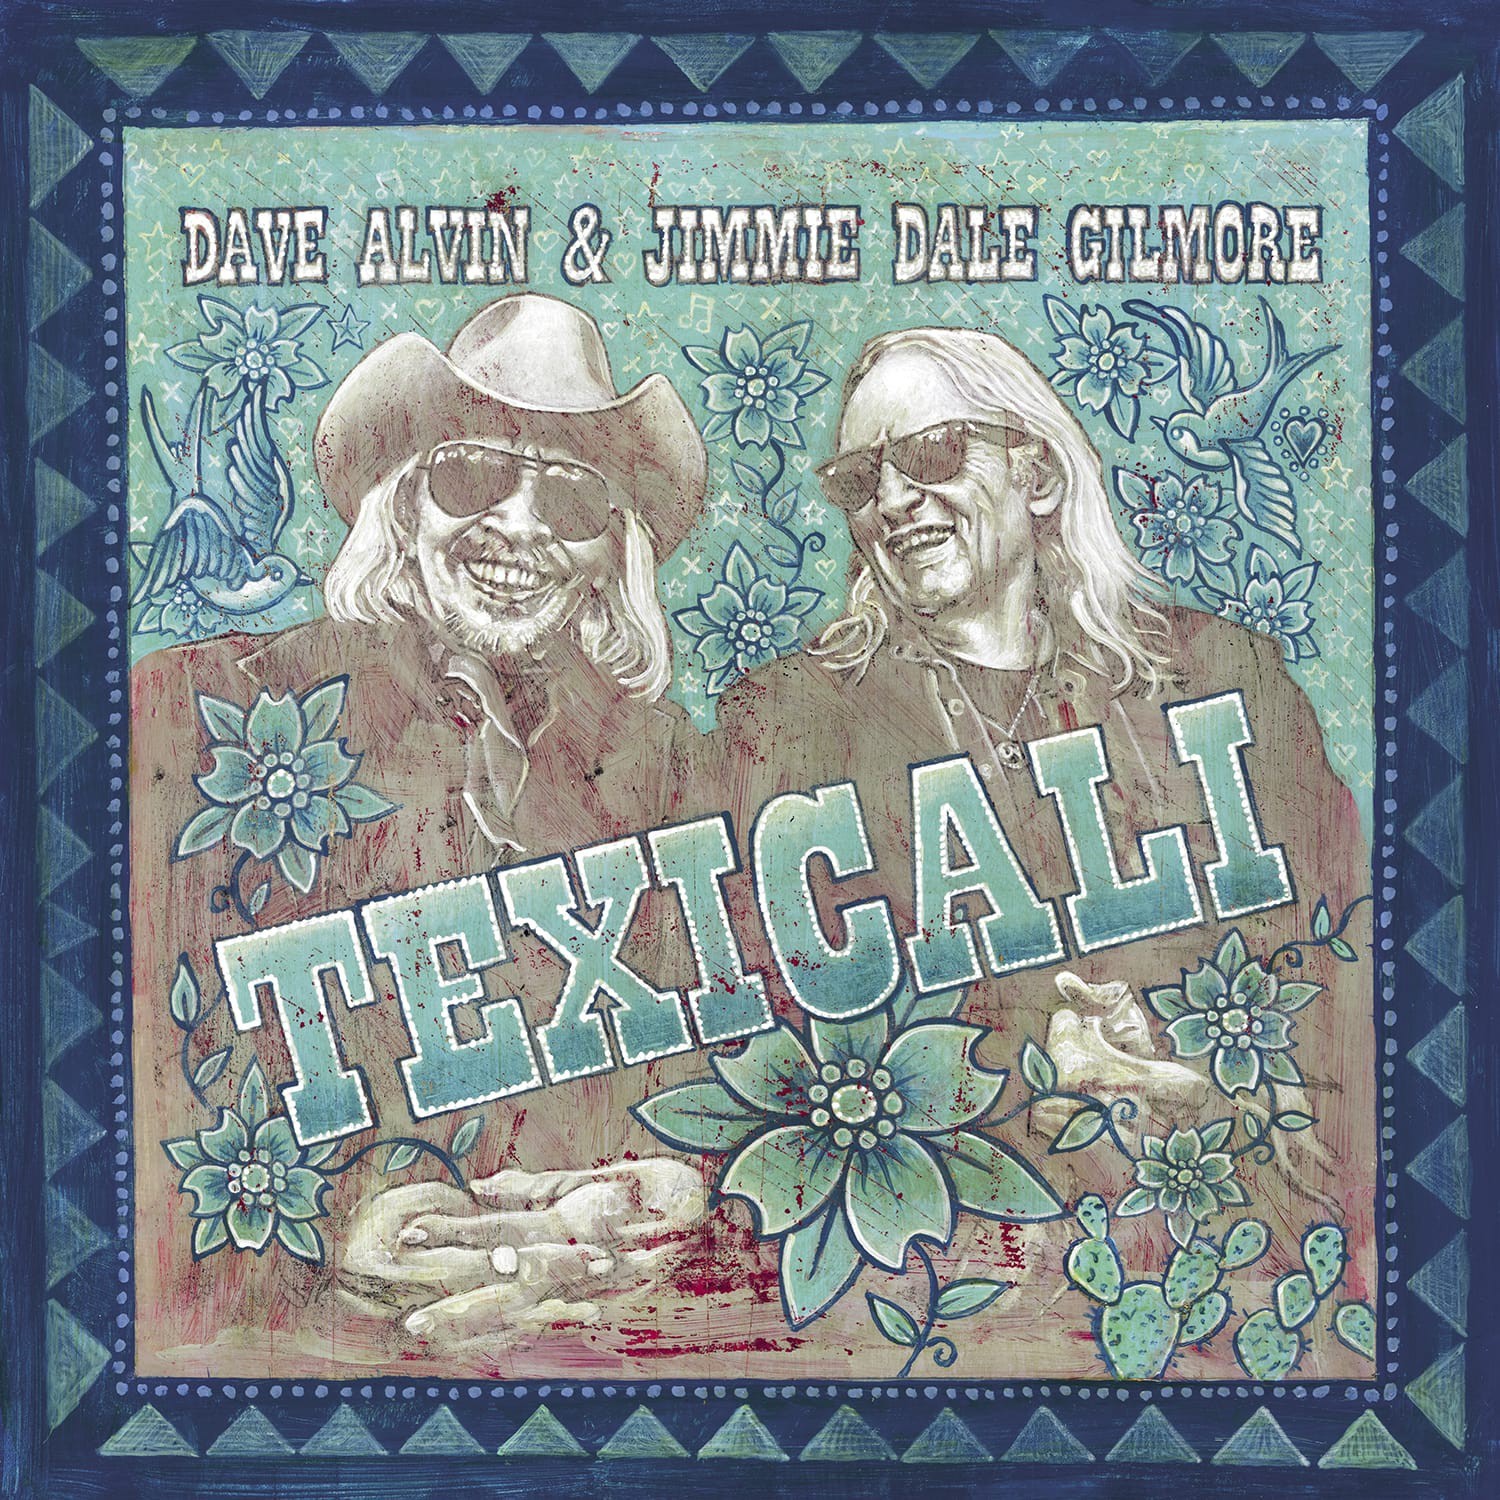 Dave Alvin & Jimmie Dale Gilmore - TexiCali